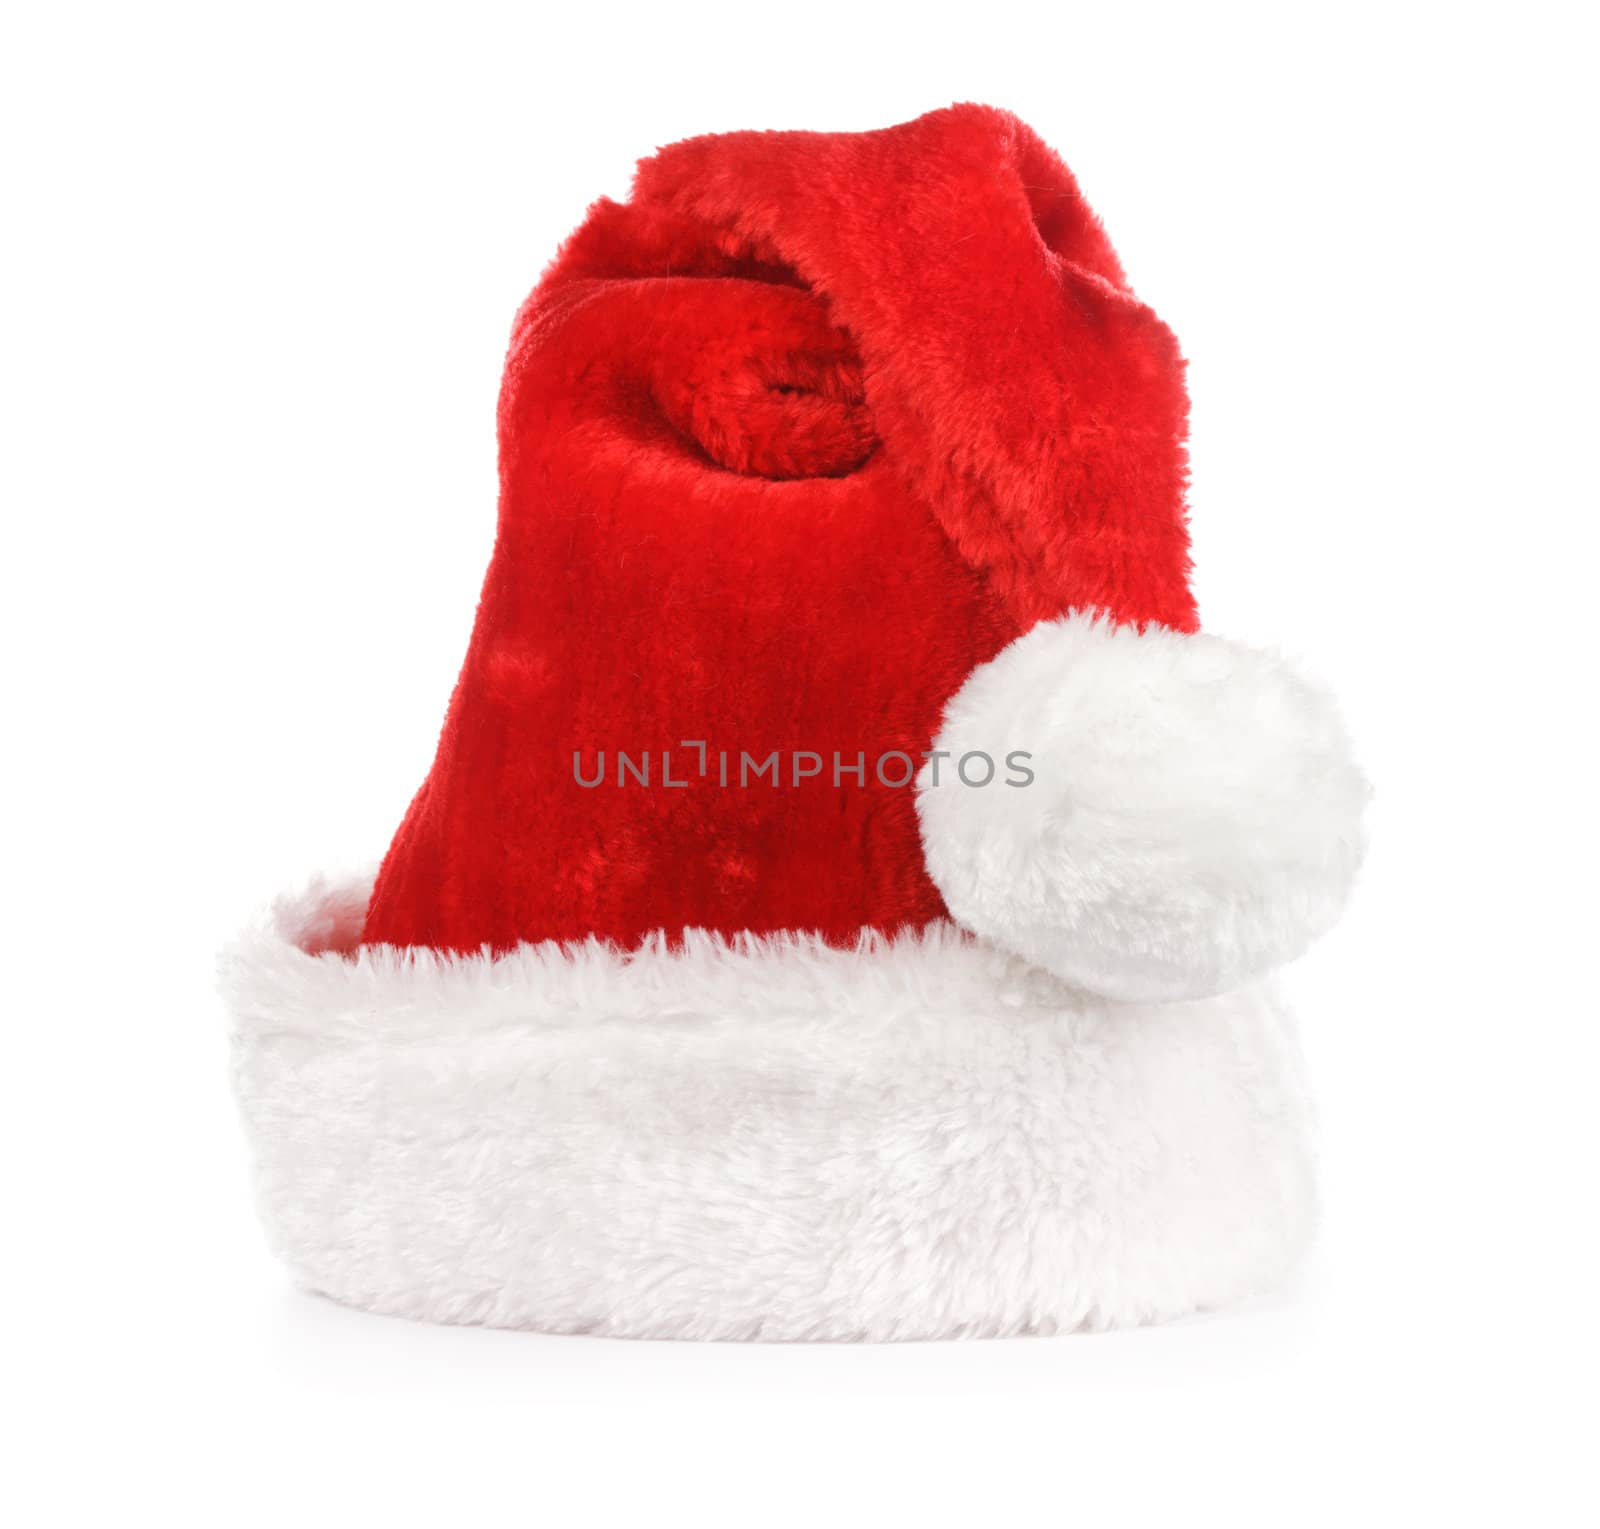 Santa red hat on white background